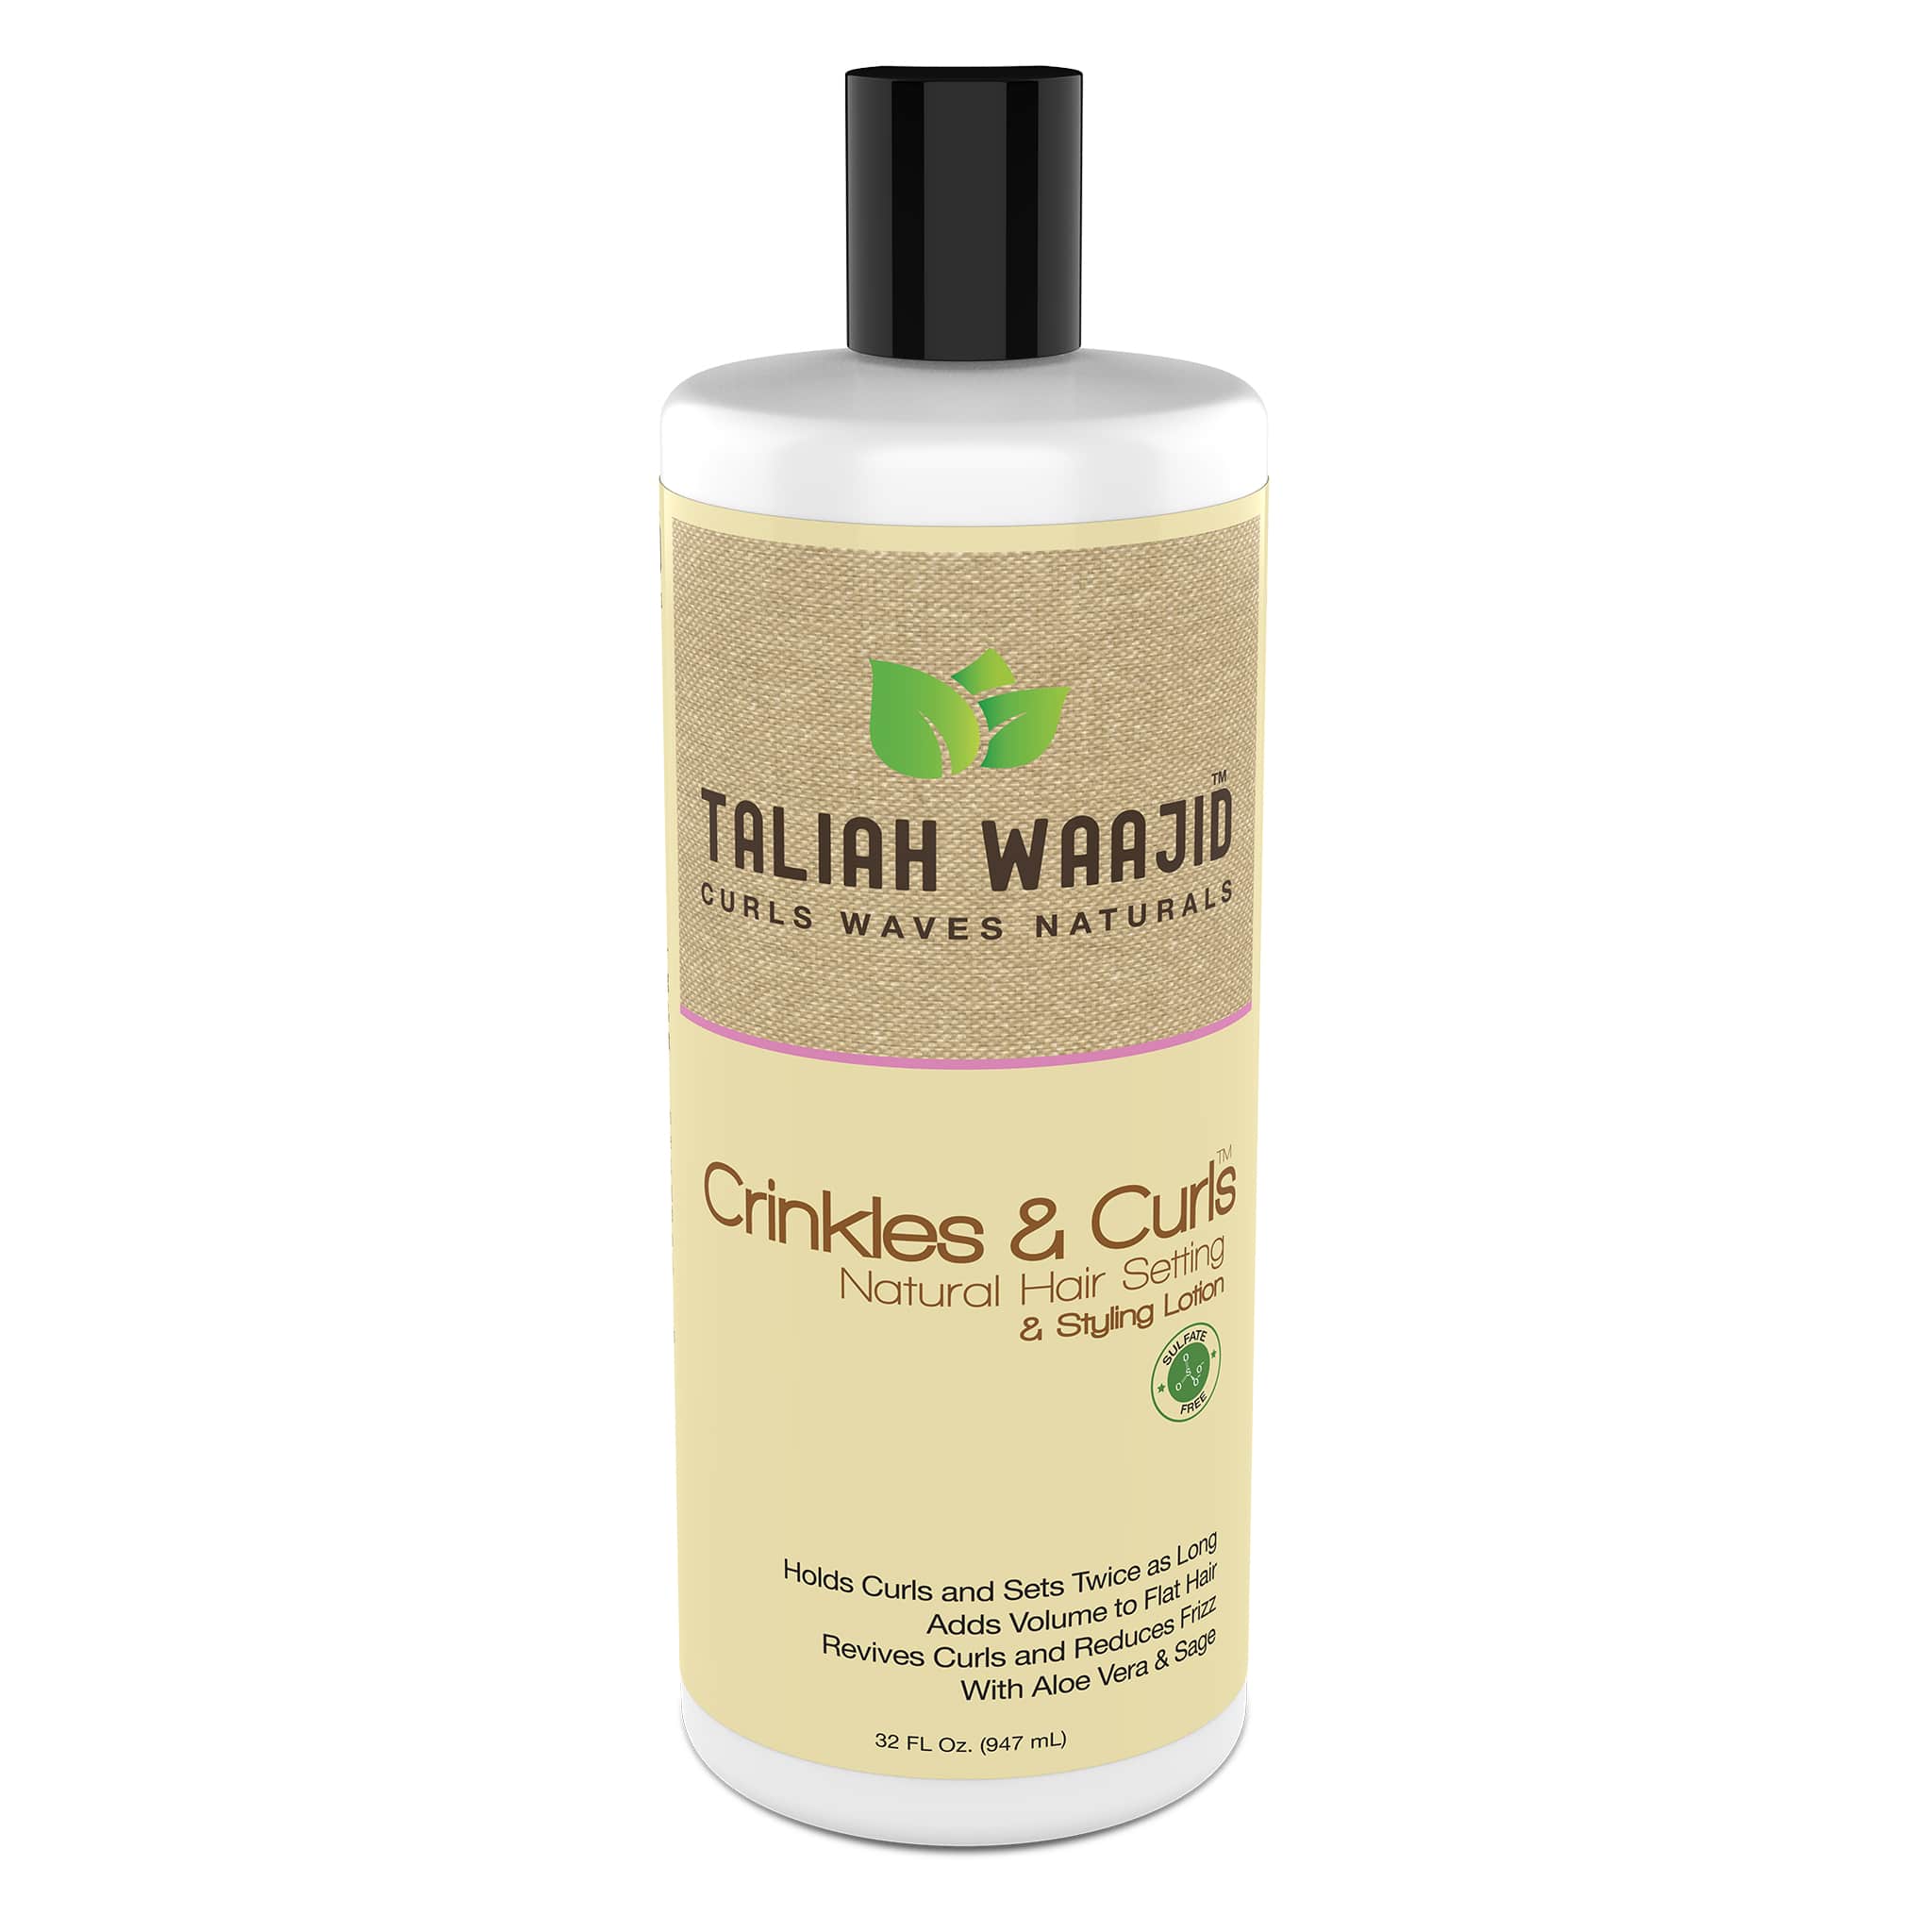 Taliah Waajid Curls, Waves & Naturals Crinkles & Curls 32oz